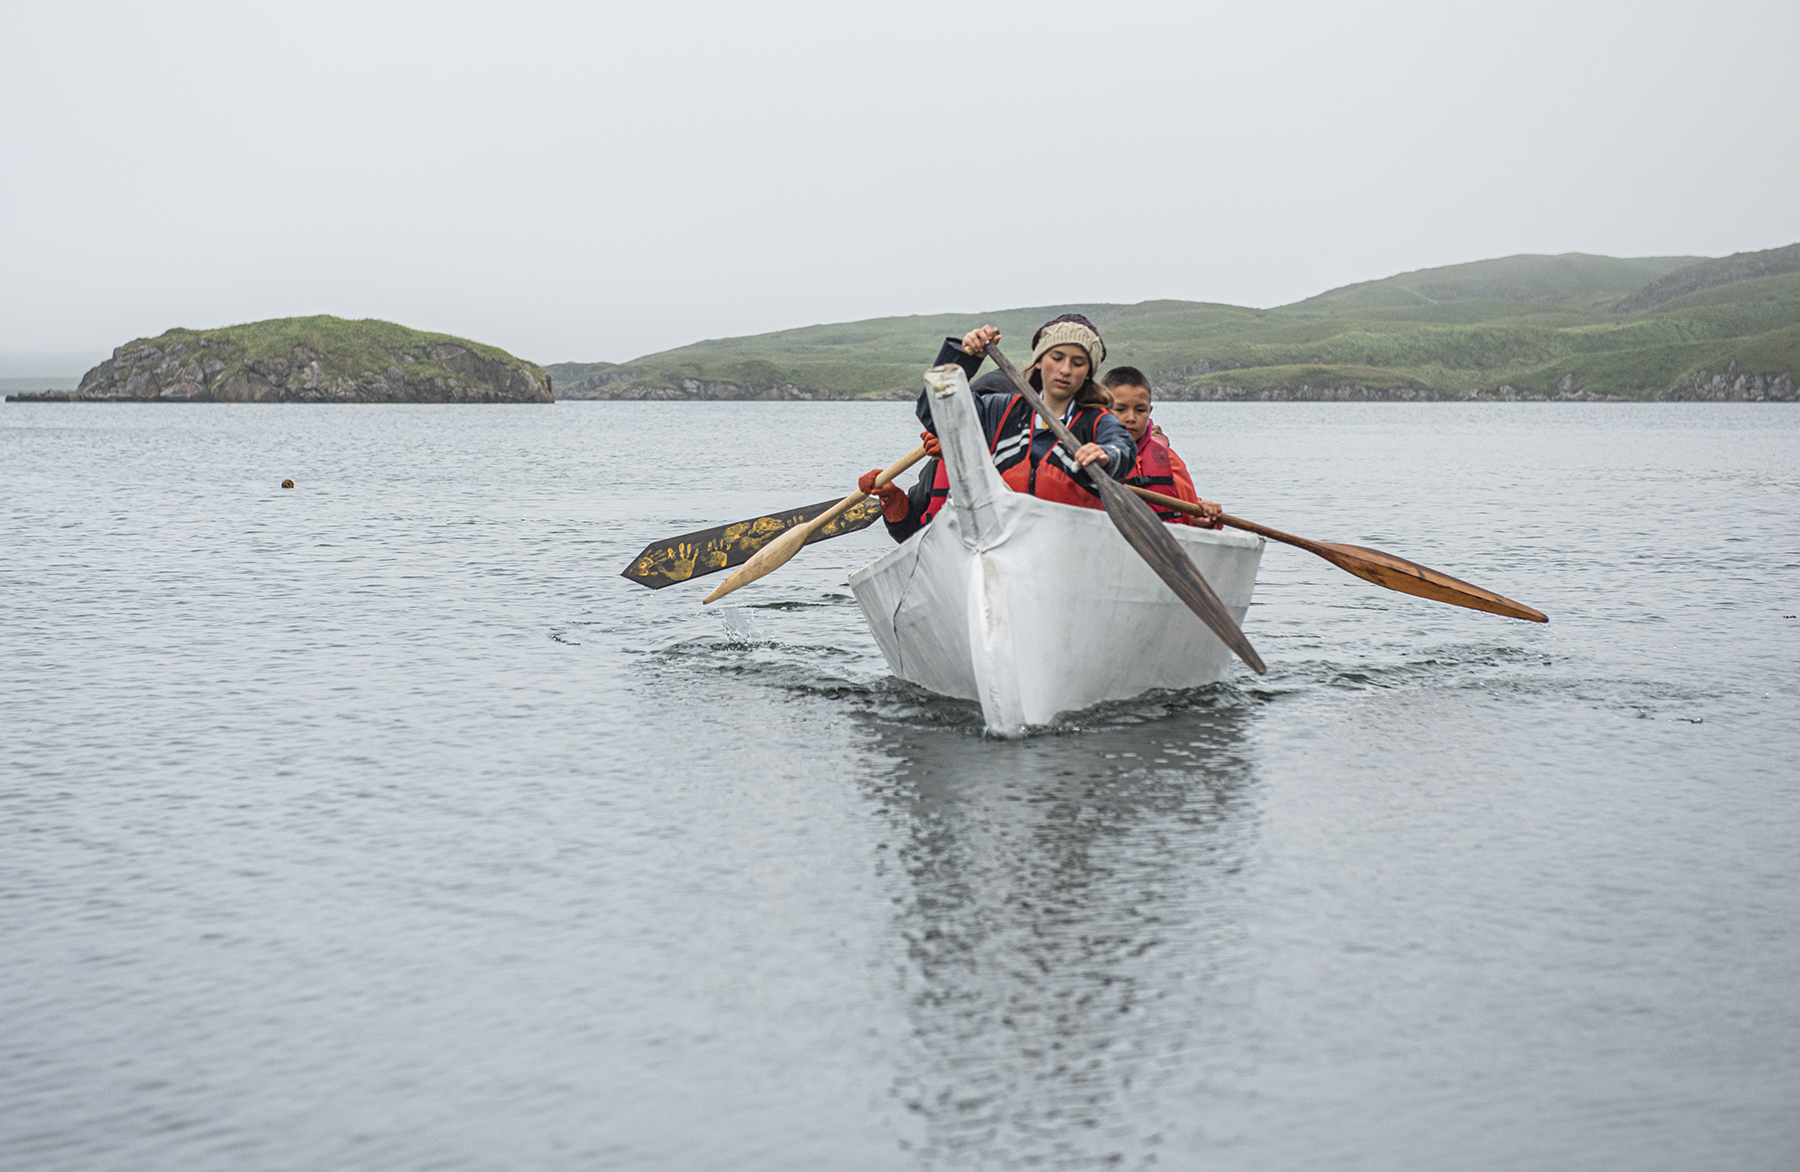 Angyaaq paddling